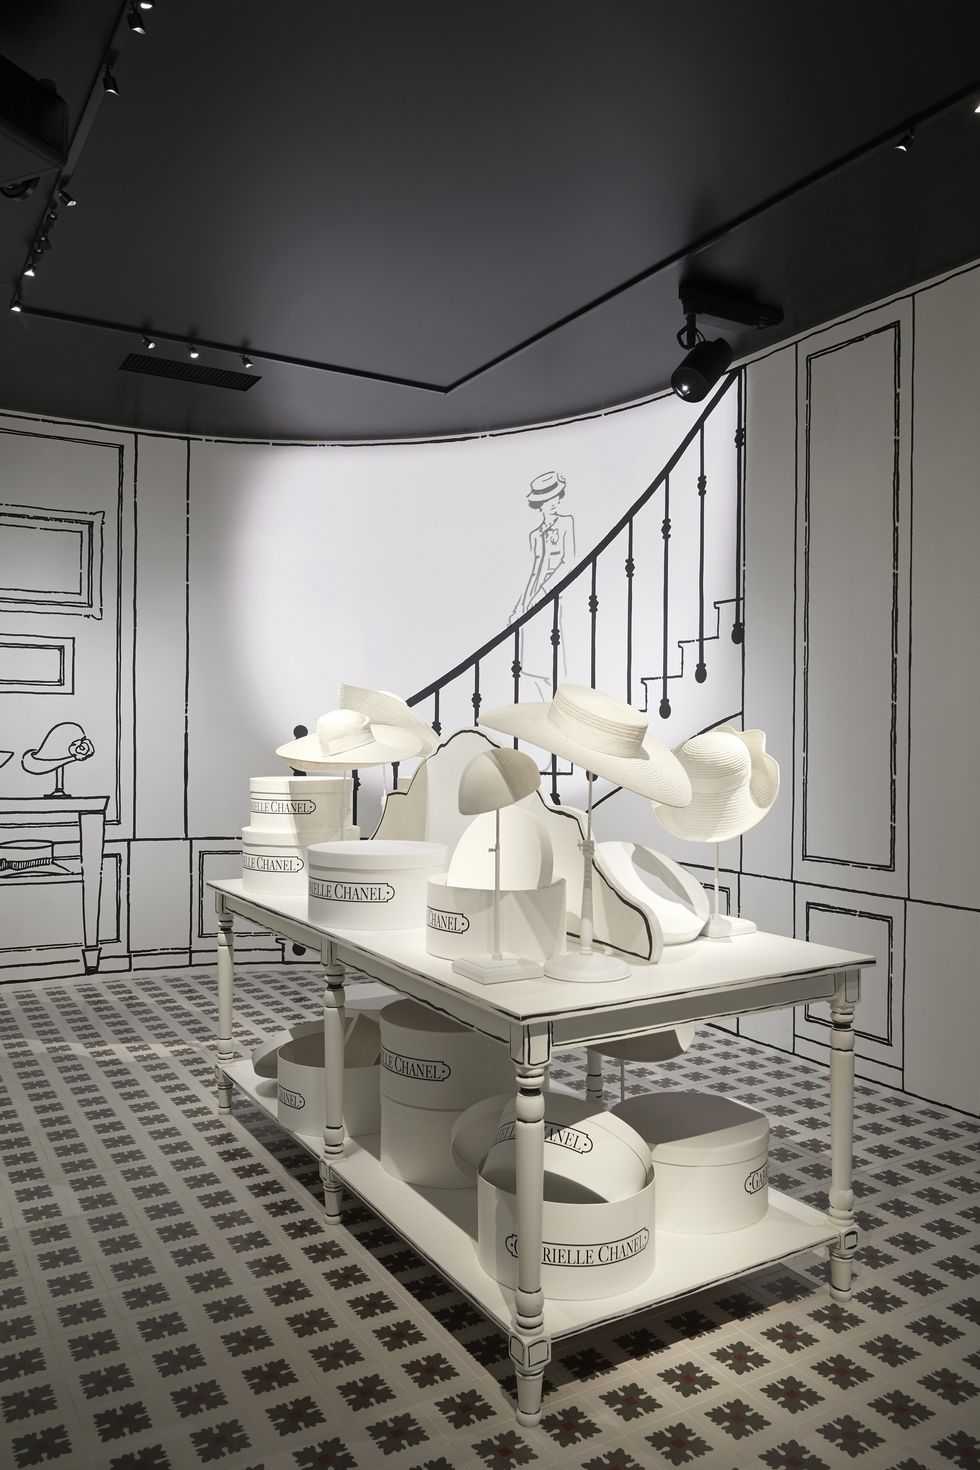 <p>        踏入D MUSEUM的挑高階梯，最先映入眼簾的是香奈兒女士鍾愛的亮漆烏木屏風圖樣屋頂，以及一系列的裝飾藝術作品，接著進入M1樓層內，仿照1913年首家Chanel法國專賣店打造的杜維埃房間（Deauville Room），在裝飾著帽盒及一系列短片的摩登空間內，線條感強烈的優雅圖樣搶佔視覺焦點，同時召喚舊時Chanel記憶再現。<span class="redactor-invisible-space"></span></p>